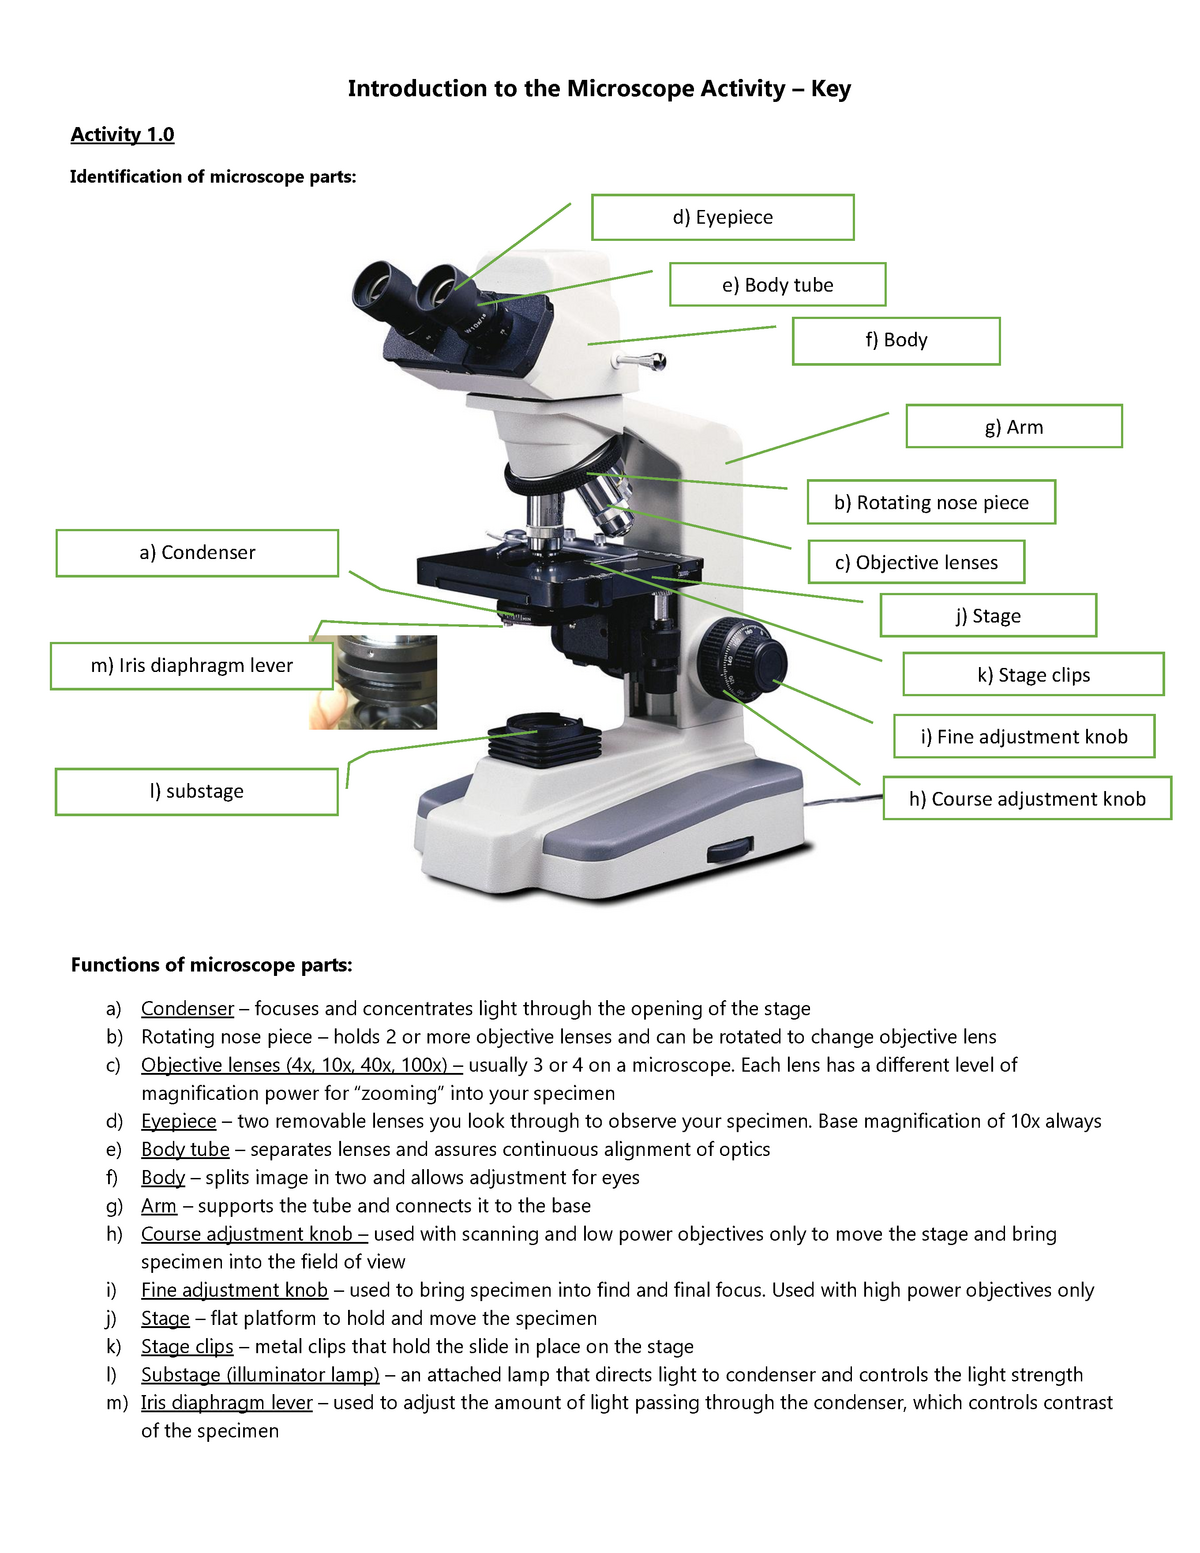 Introduction to the Microscope Activity-Key F18 - BIO SCI-201 - - StuDocu